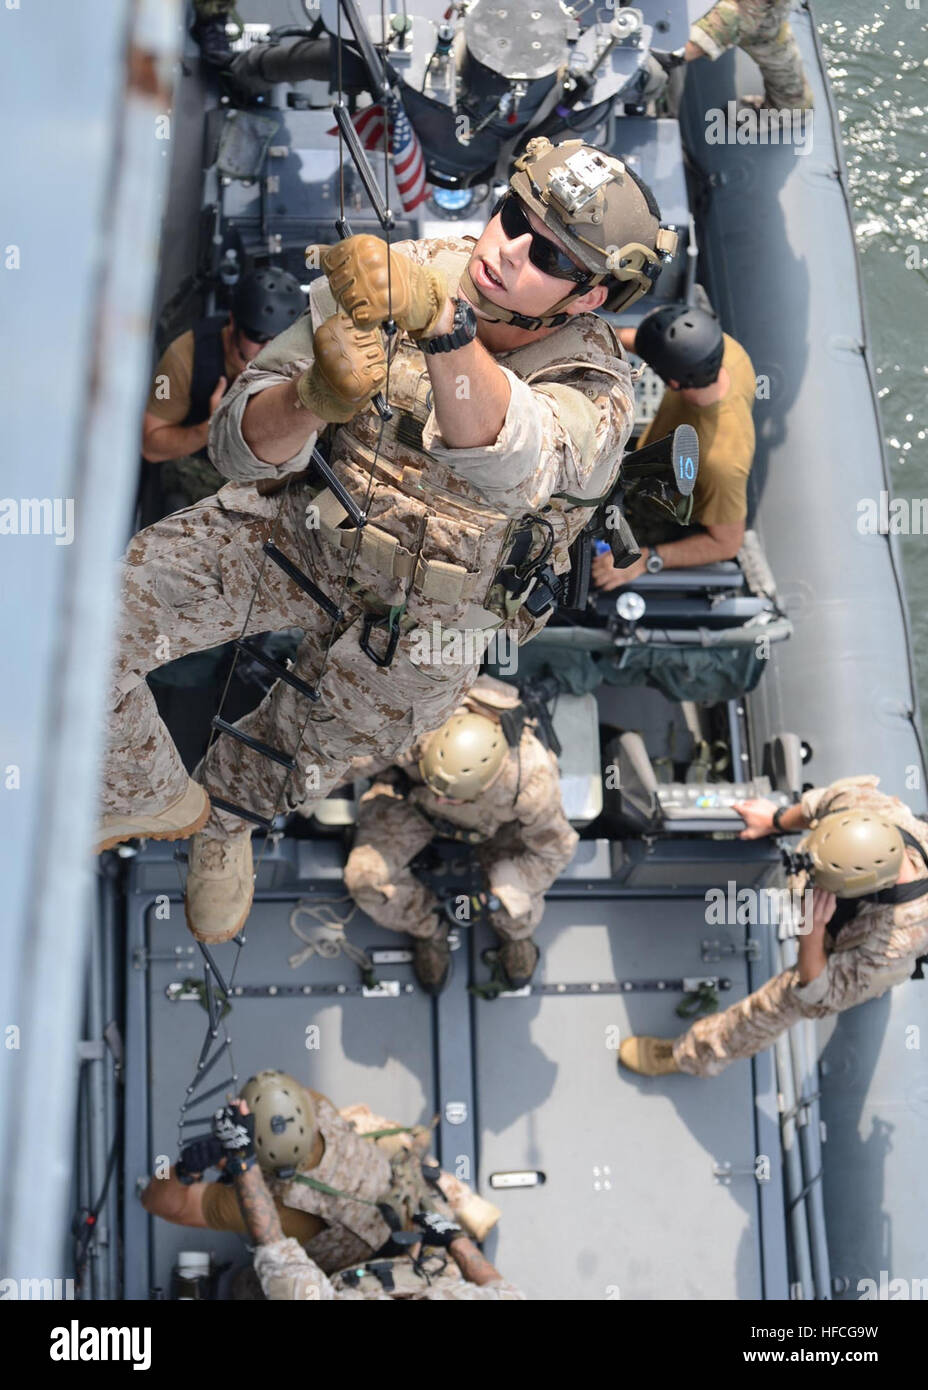 An East-Coast based U.S. Navy SEAL (Sea, Air, and Land) climbs a